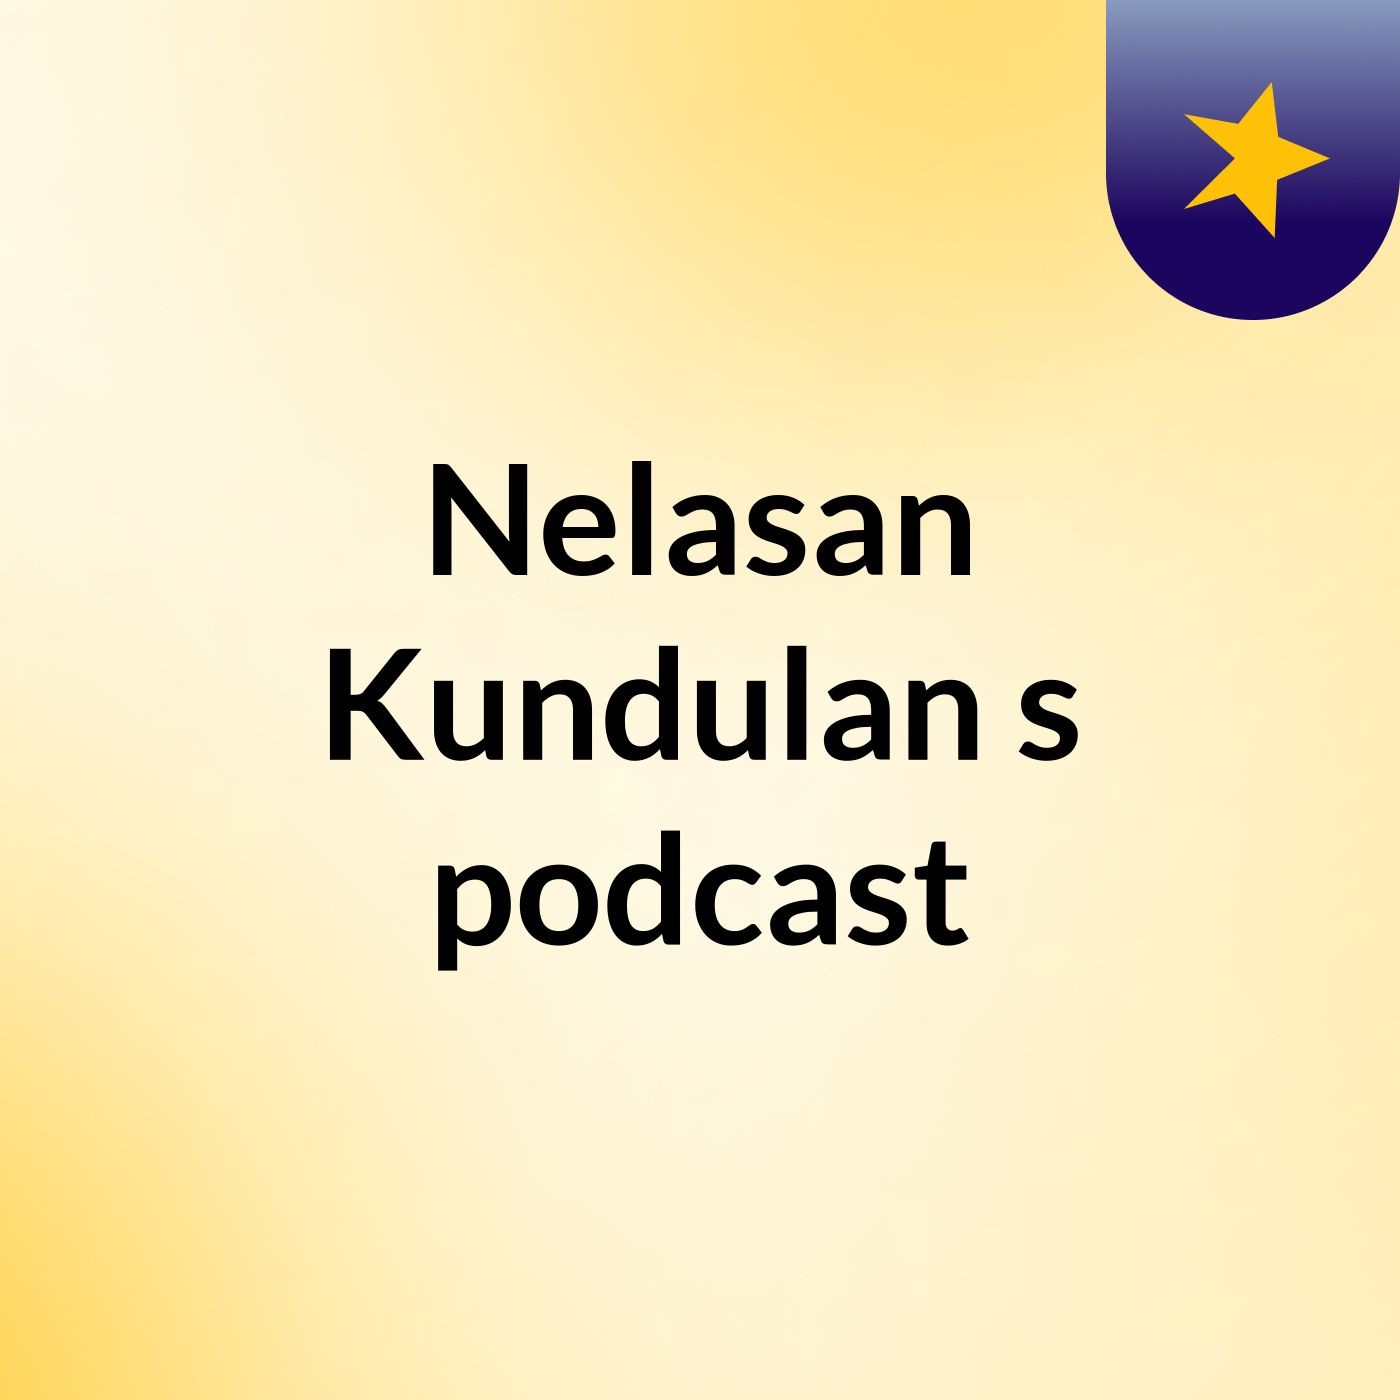 Nelasan Kundulan's podcast